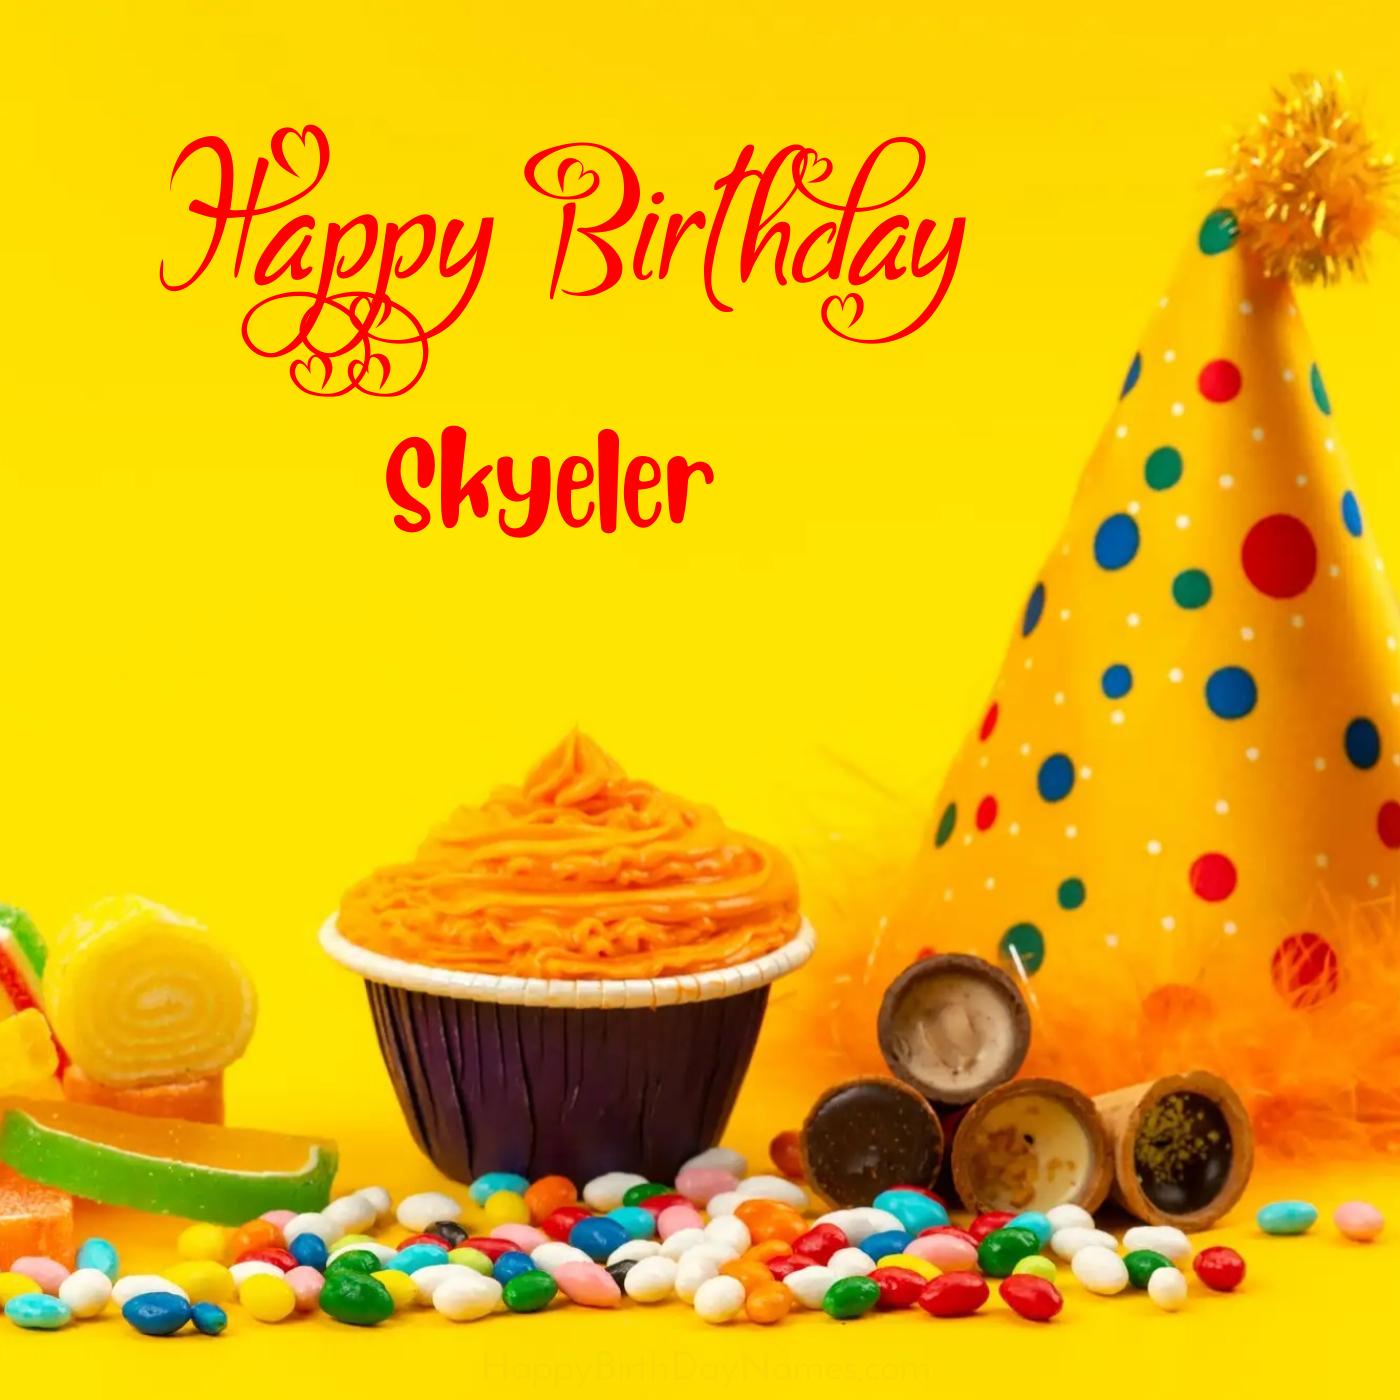 Happy Birthday Skyeler Colourful Celebration Card